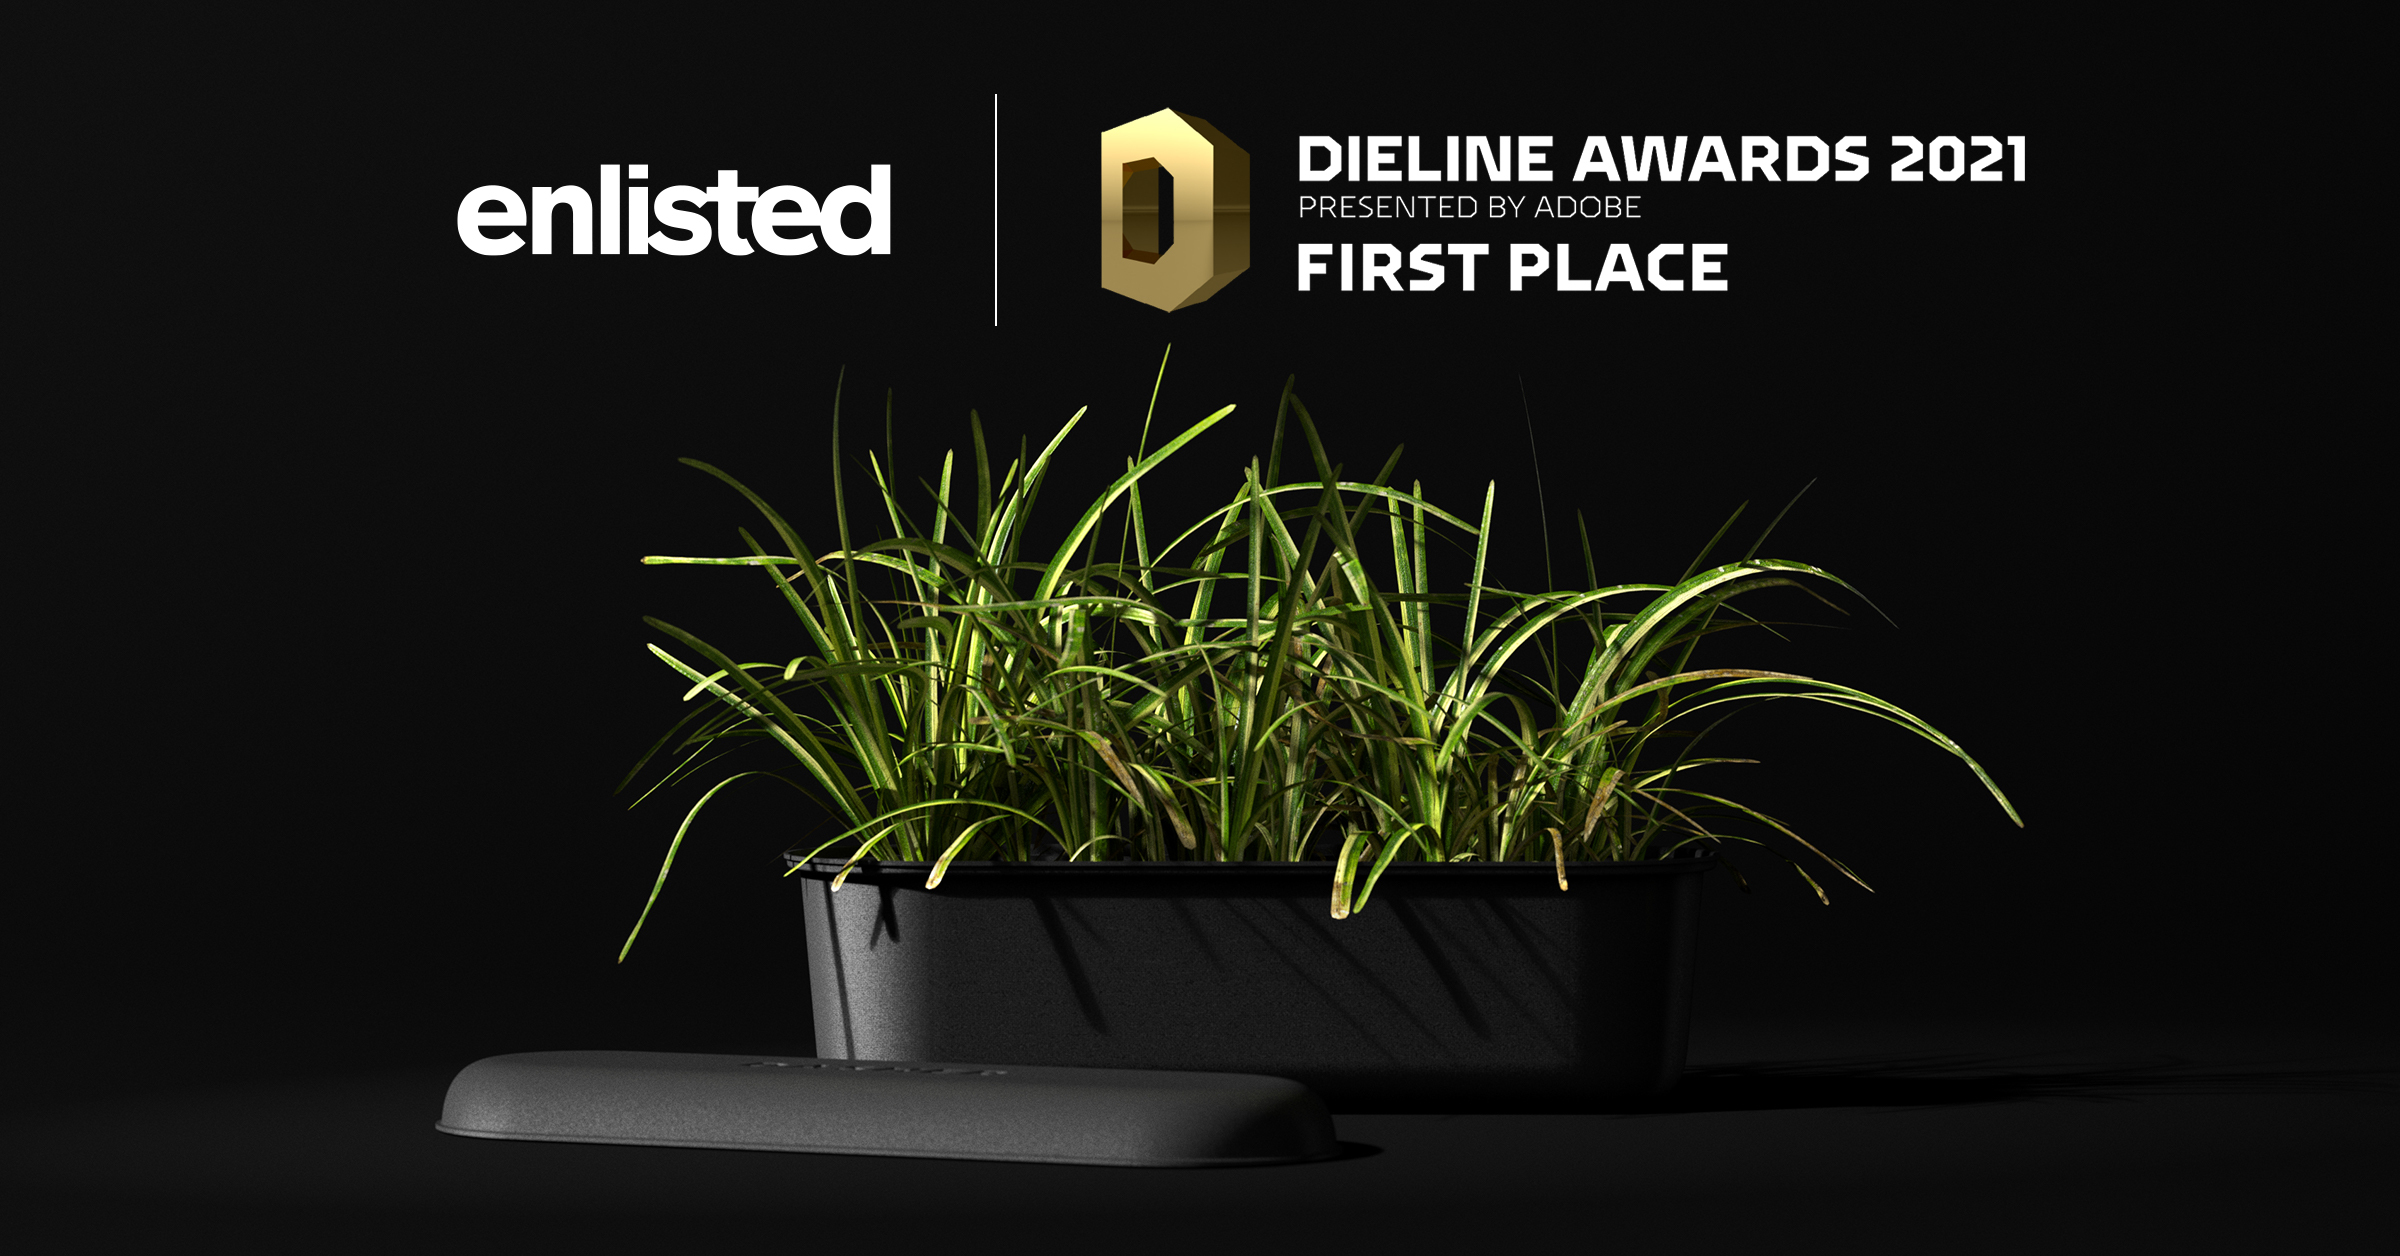 Enlisted Dieline Awards 2021